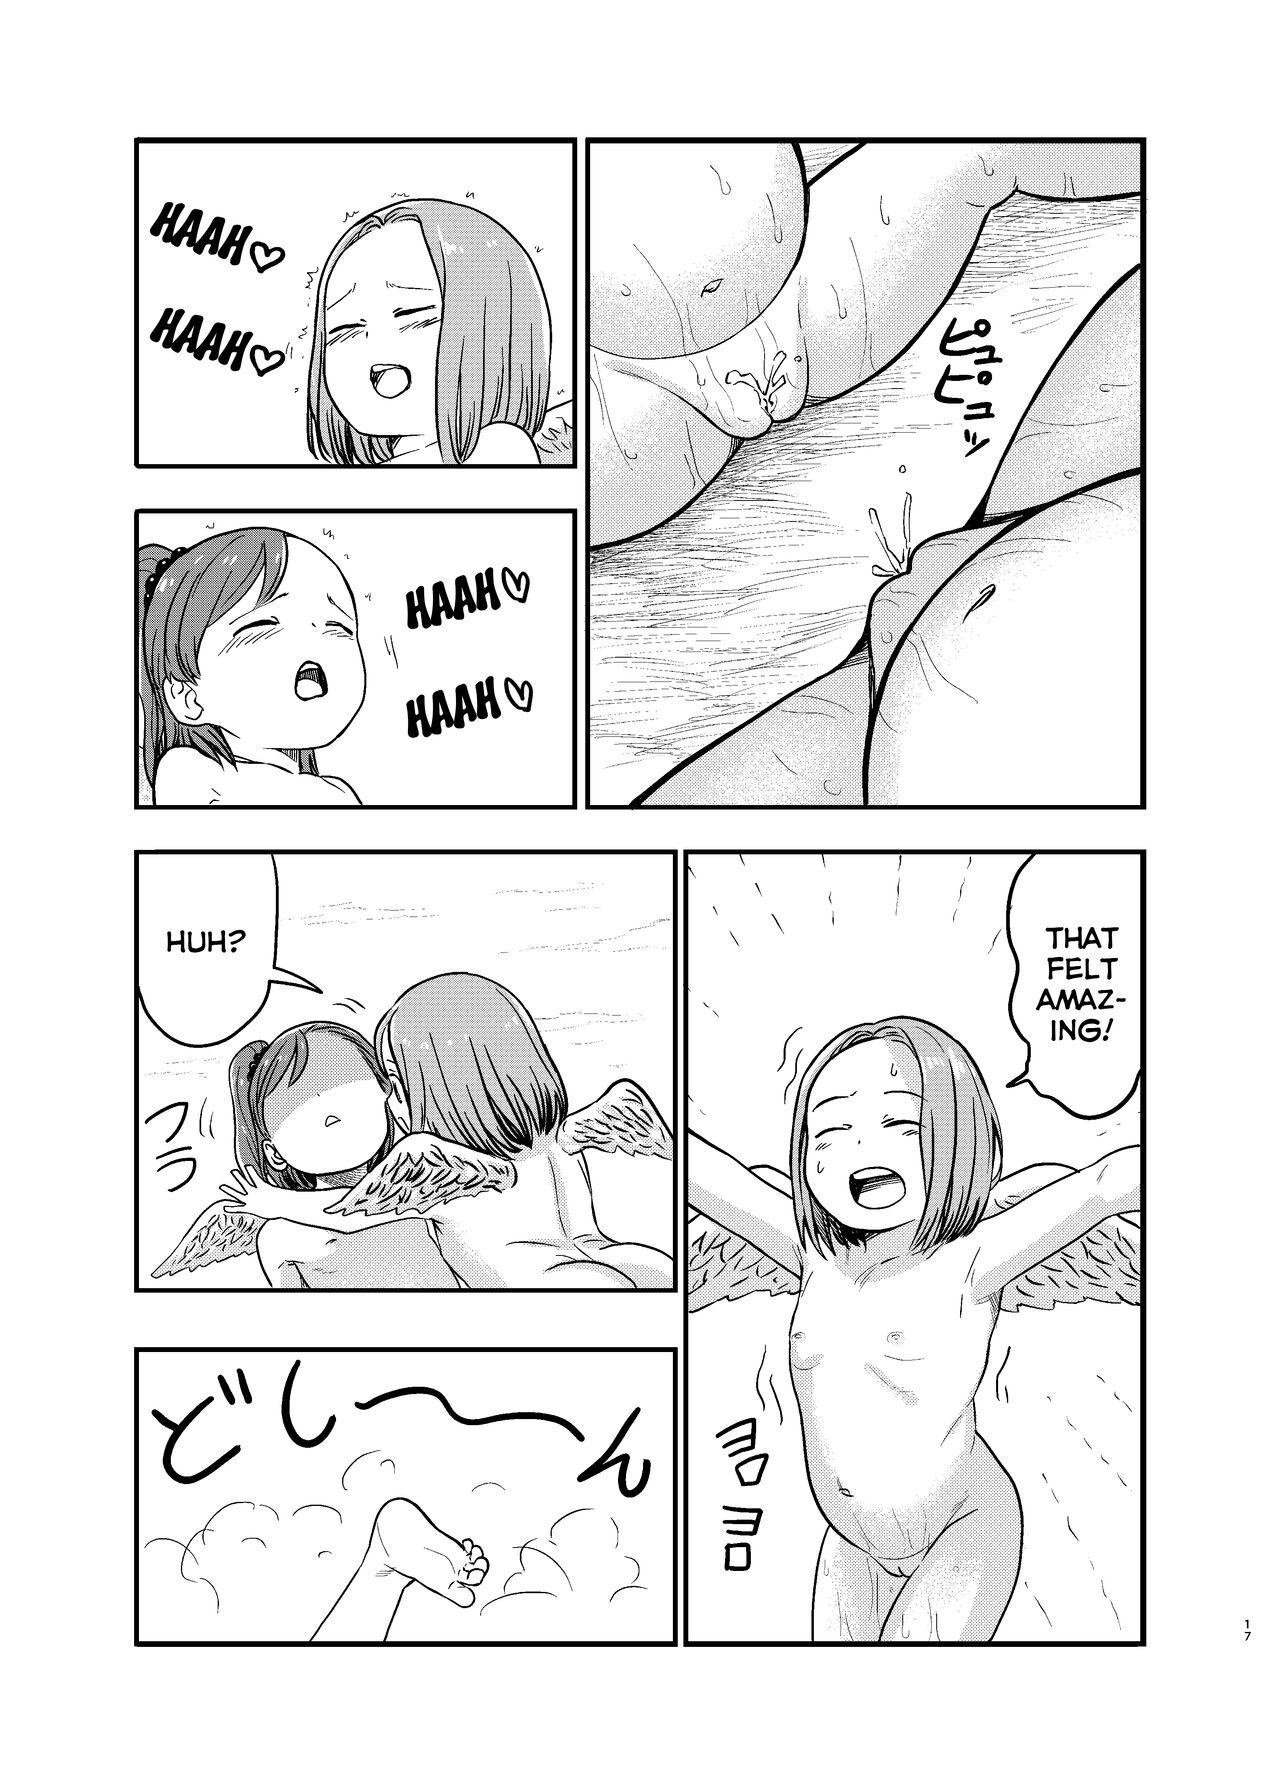 Milfsex Yuri Tenshi no Futari ga Ecchi na Koto o Suru Manga | A Manga Where Two Lesbian Angels Do Lewd Things Together Slutty - Page 17